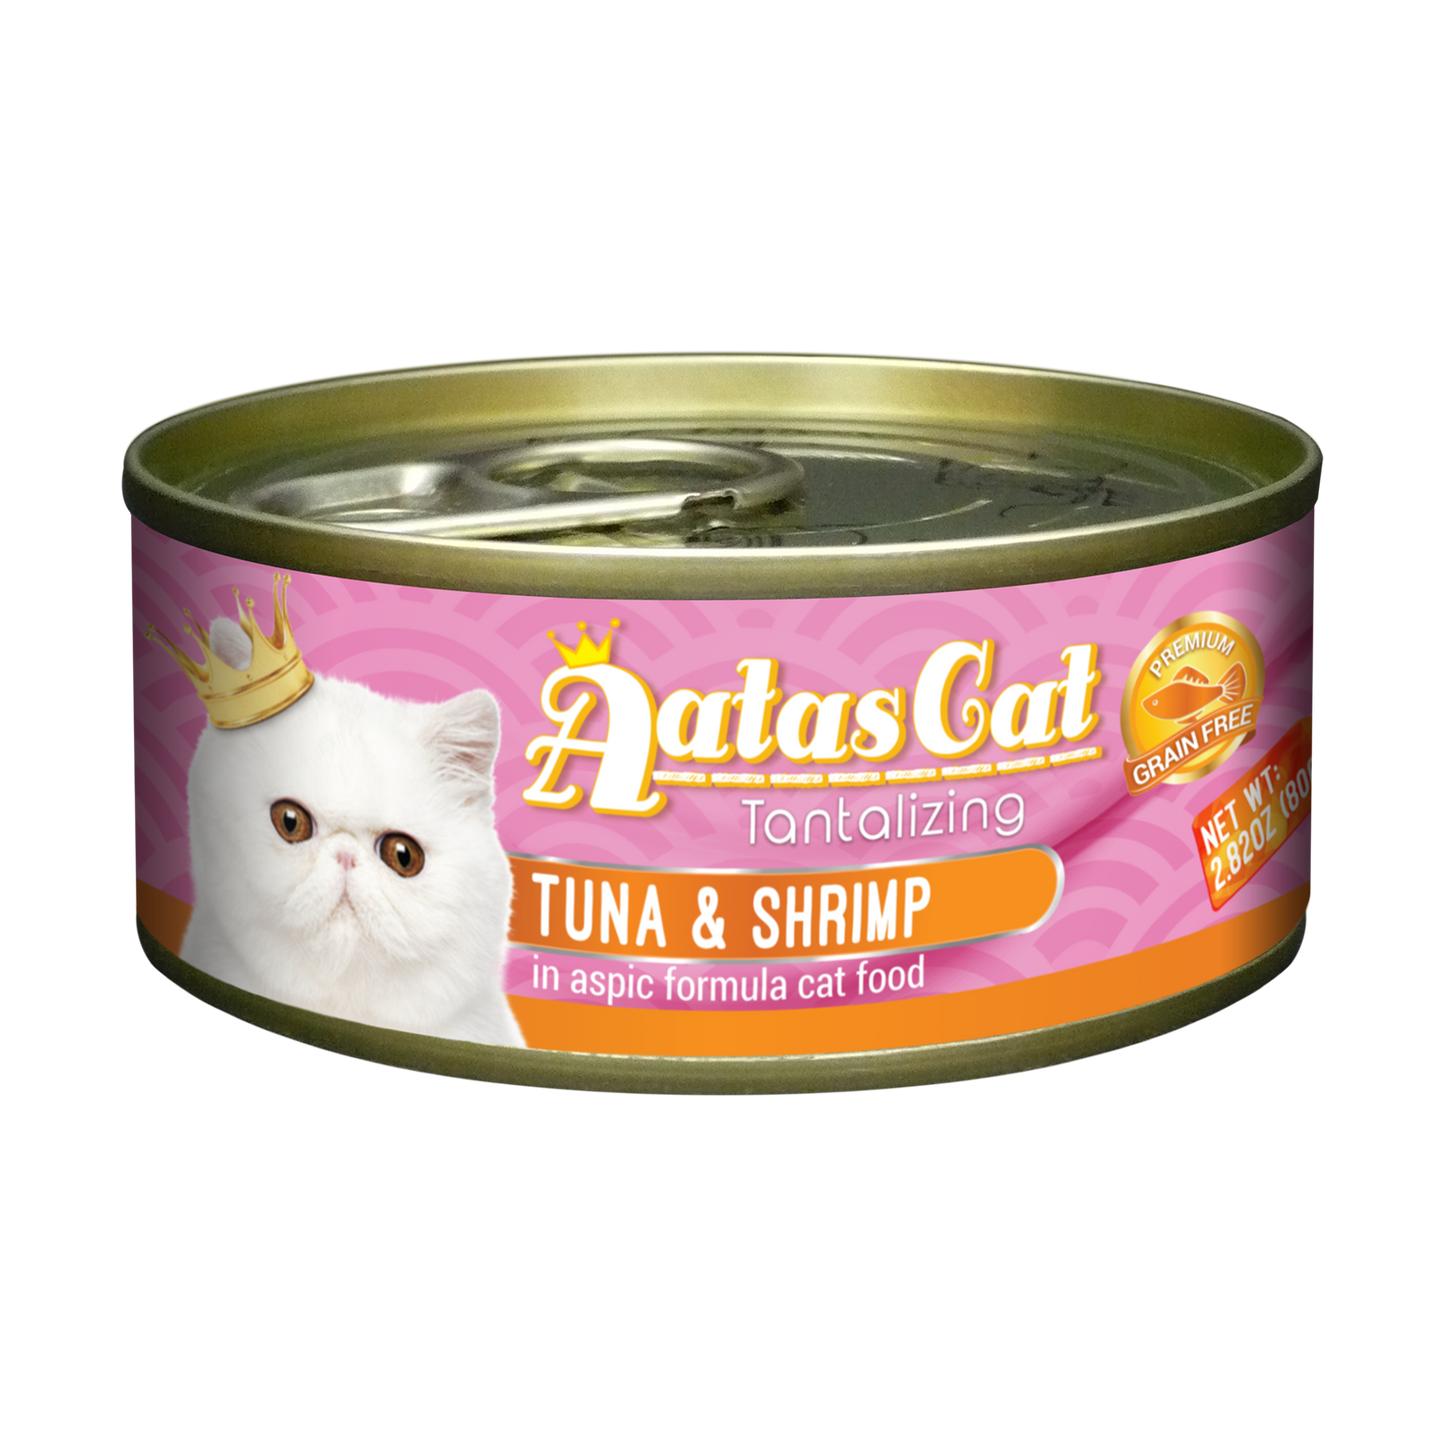 Aatas Cat Tantalizing Tuna & Shrimp Cat Canned Food 80g